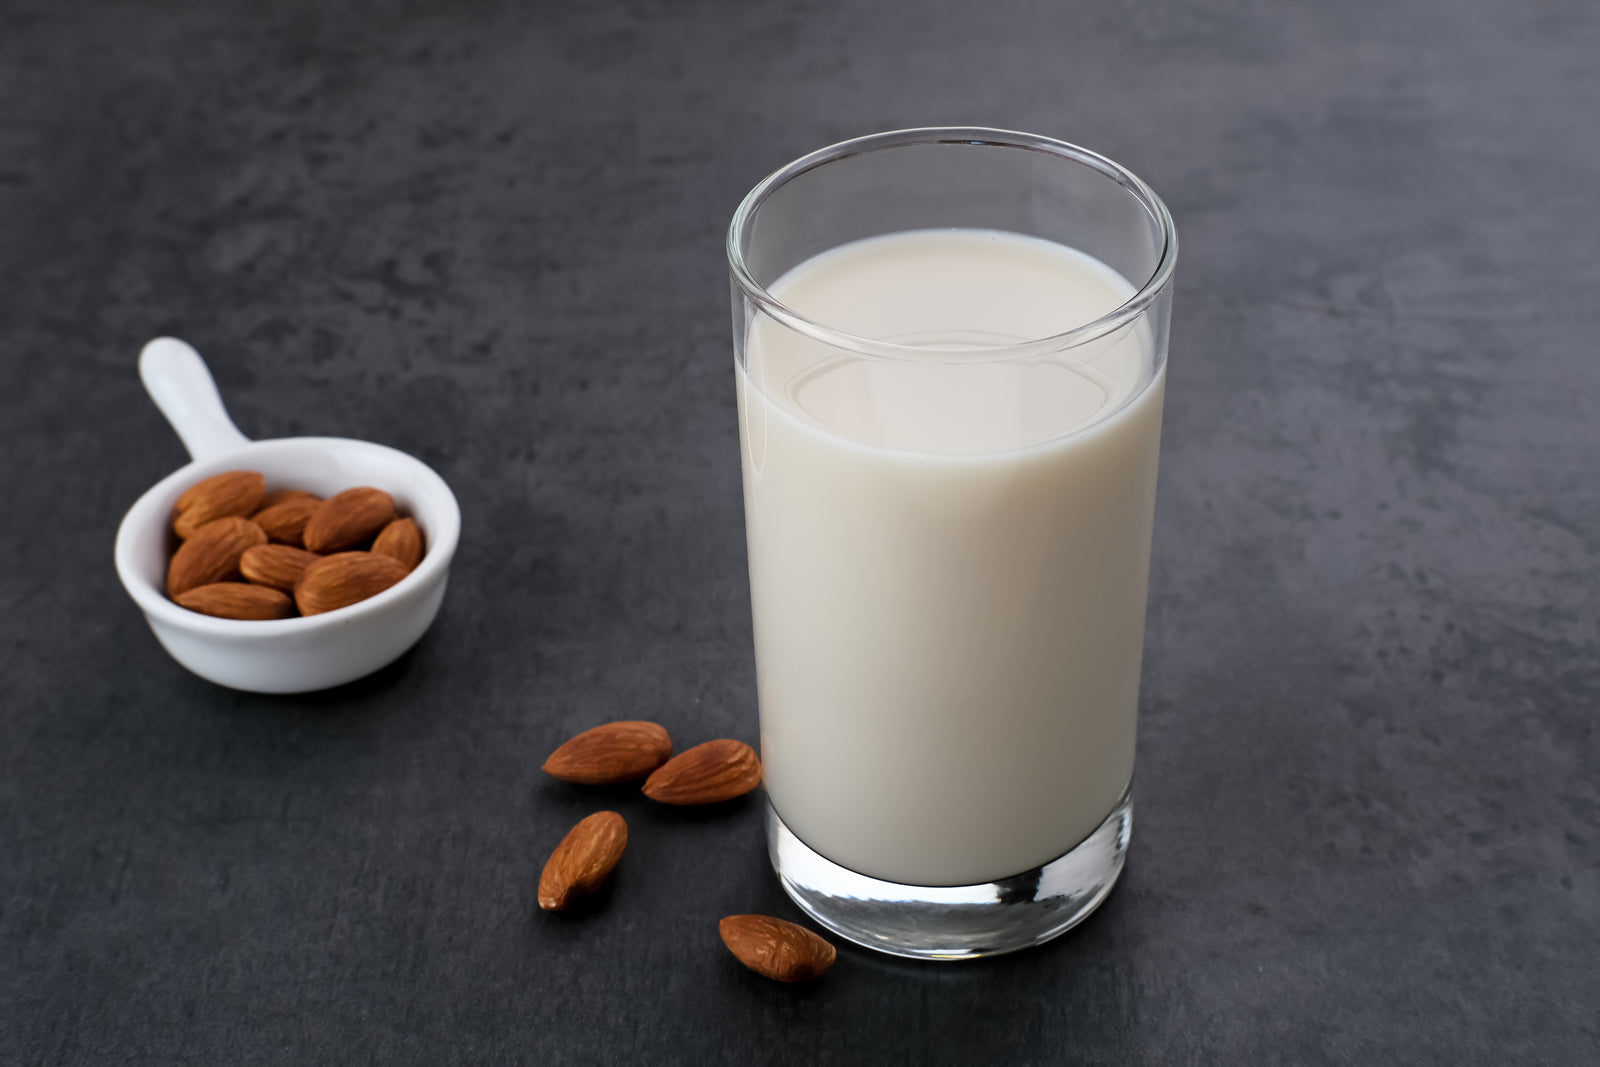 Almond Milk: The “Cream” of the Crop